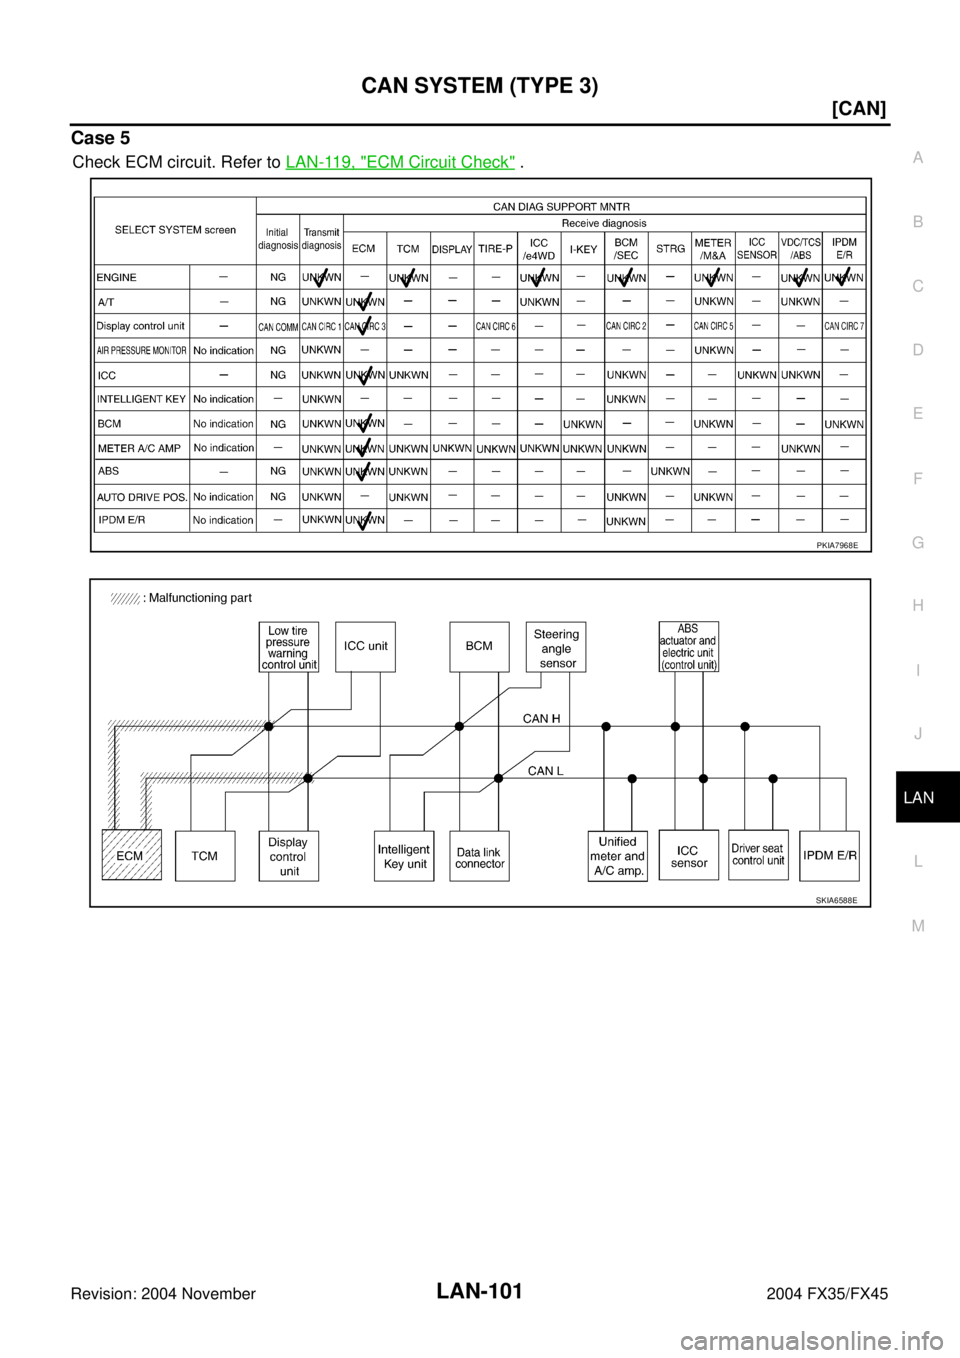 INFINITI FX35 2004  Service Manual CAN SYSTEM (TYPE 3)
LAN-101
[CAN]
C
D
E
F
G
H
I
J
L
MA
B
LAN
Revision: 2004 November 2004 FX35/FX45
Case 5
Check ECM circuit. Refer to LAN-119, "ECM Circuit Check" .
PKIA7968E
SKIA6588E 